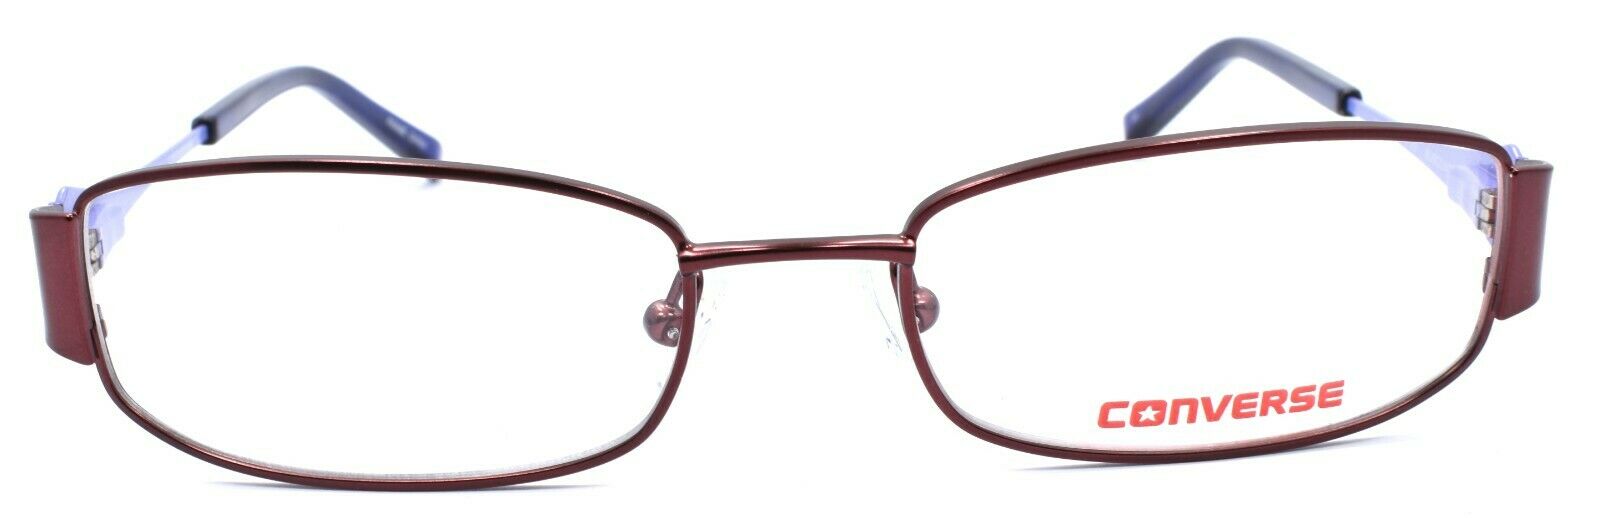 2-CONVERSE K002 Kids Eyeglasses Frames 50-17-135 Burgundy + CASE-751286244762-IKSpecs